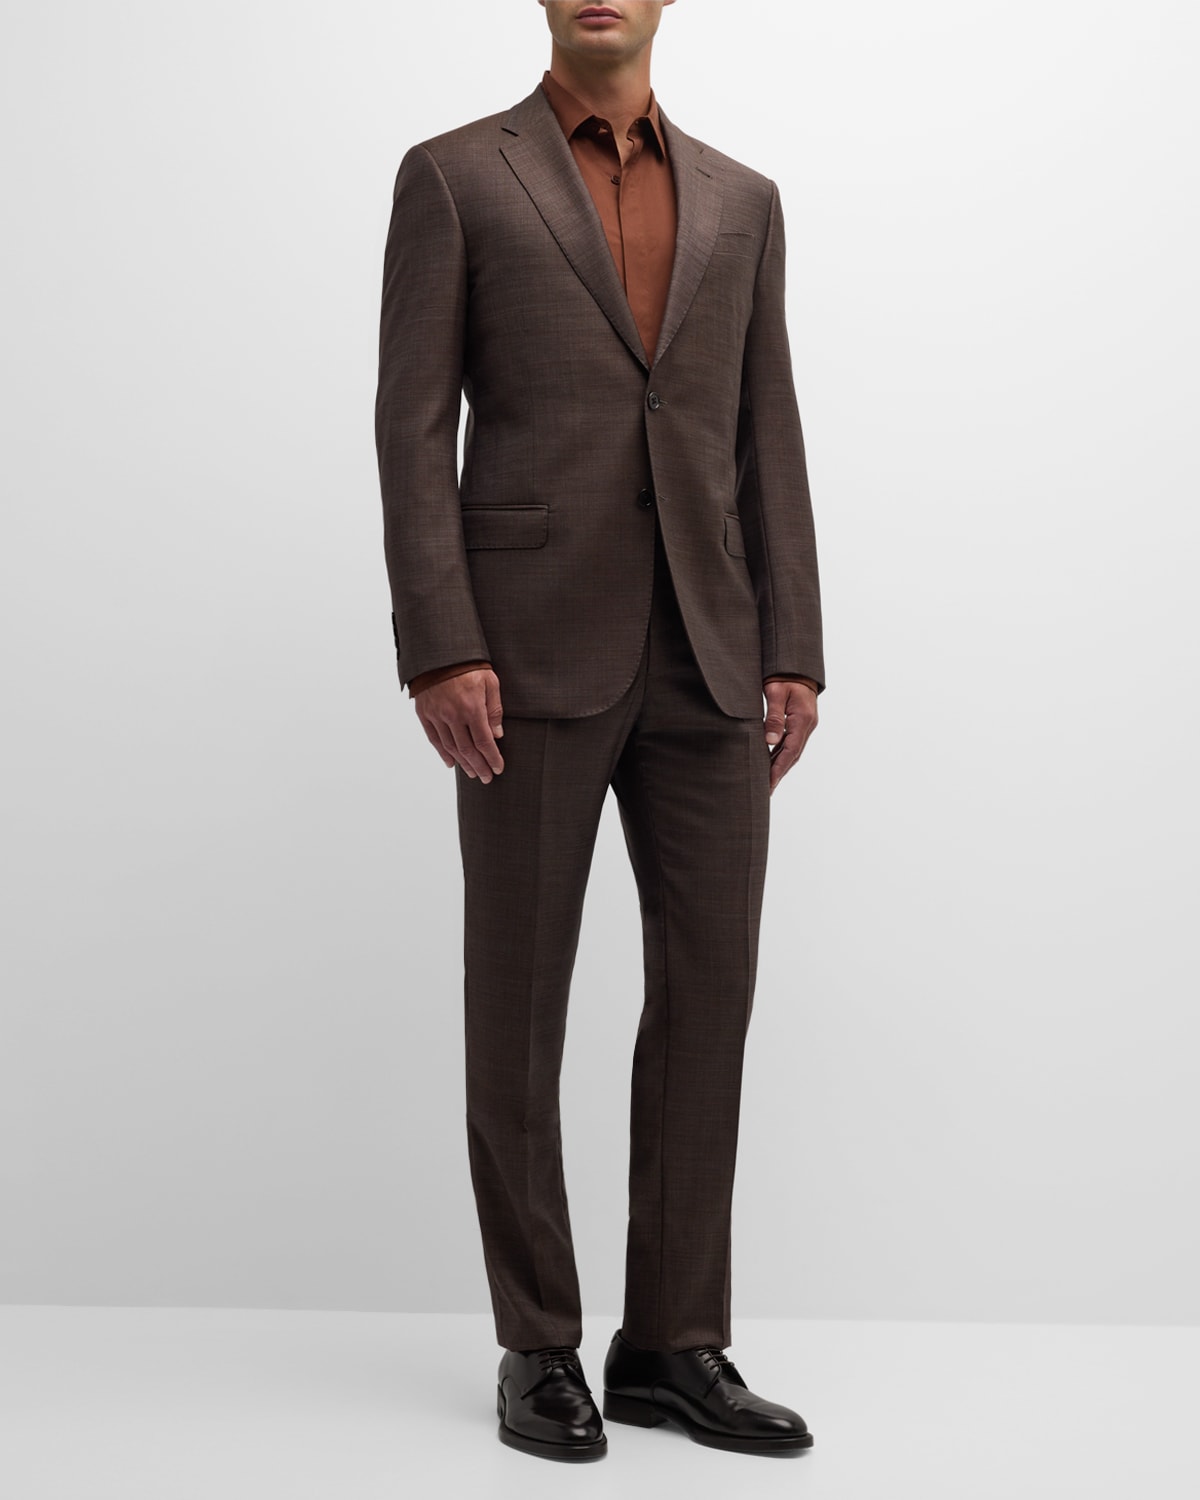 Emporio Armani Men's Melange Wool Suit In Solid Dark Brown